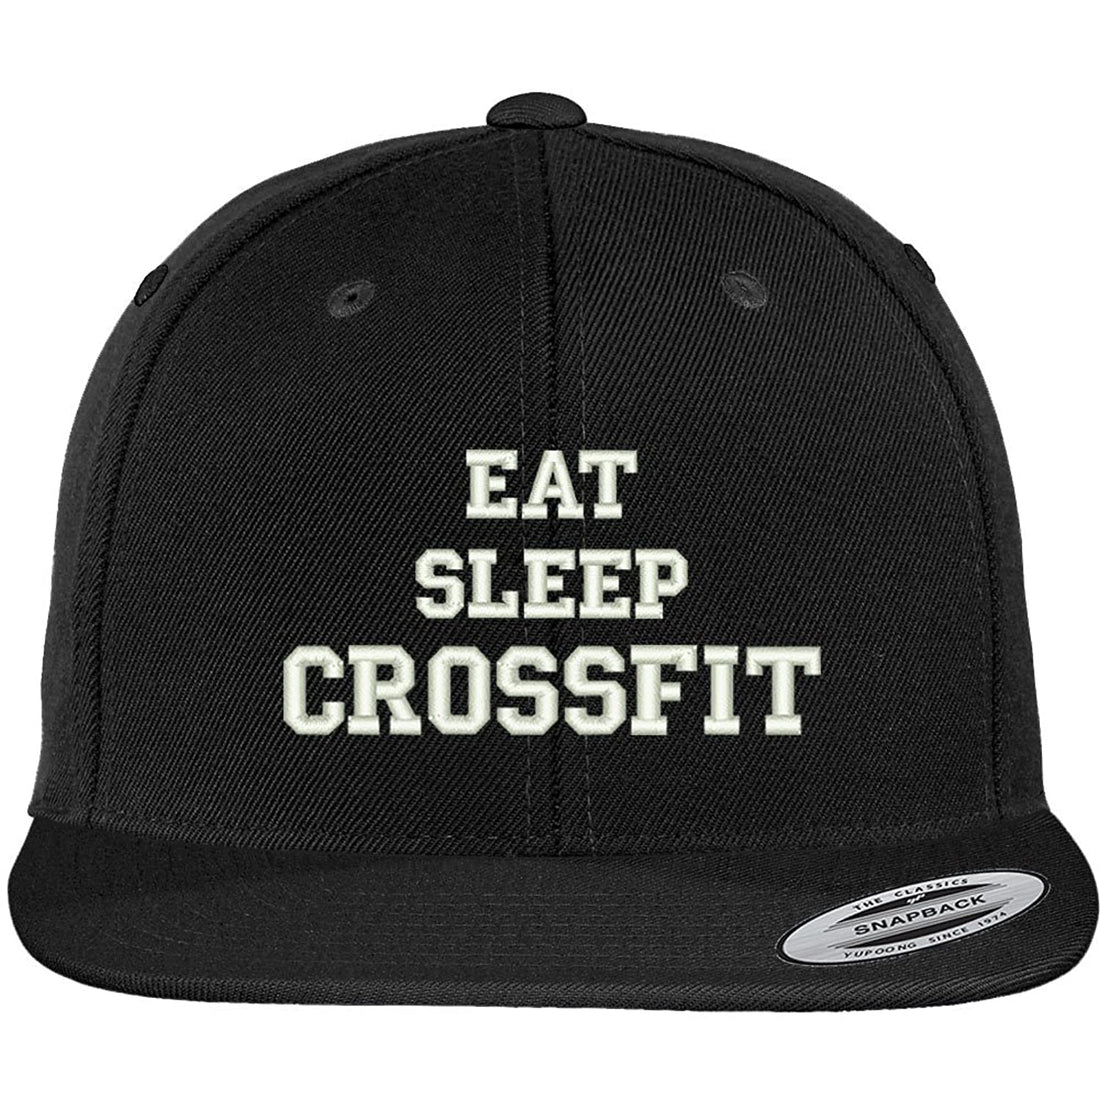 Trendy Apparel Shop Eat Sleep Crossfit Embroidered Flatbill Snapback Baseball Cap